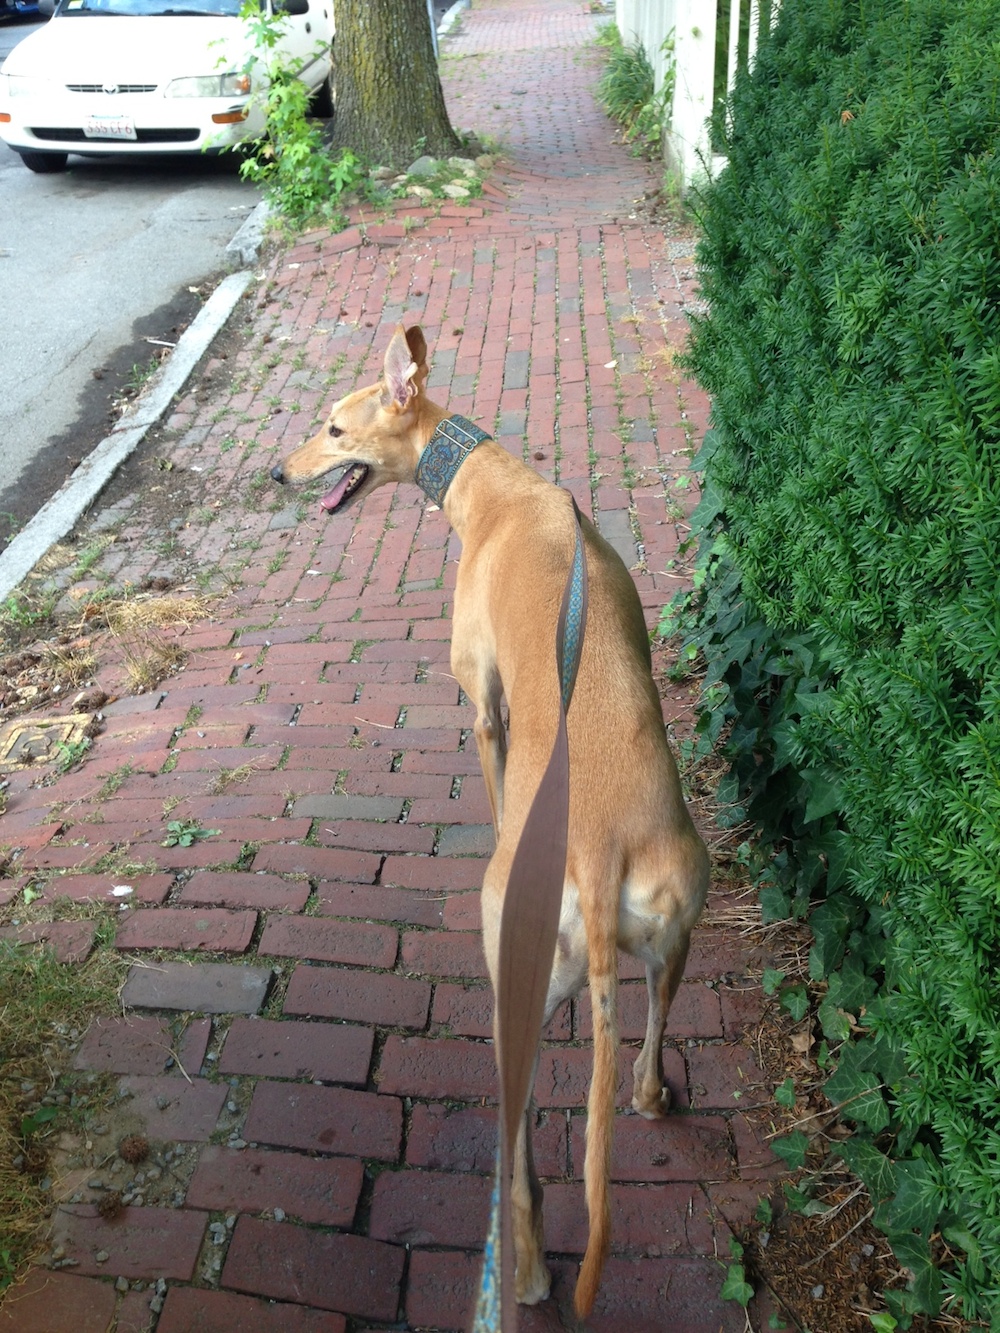 Frugal Hound on the brick sidewalks of Cambridge